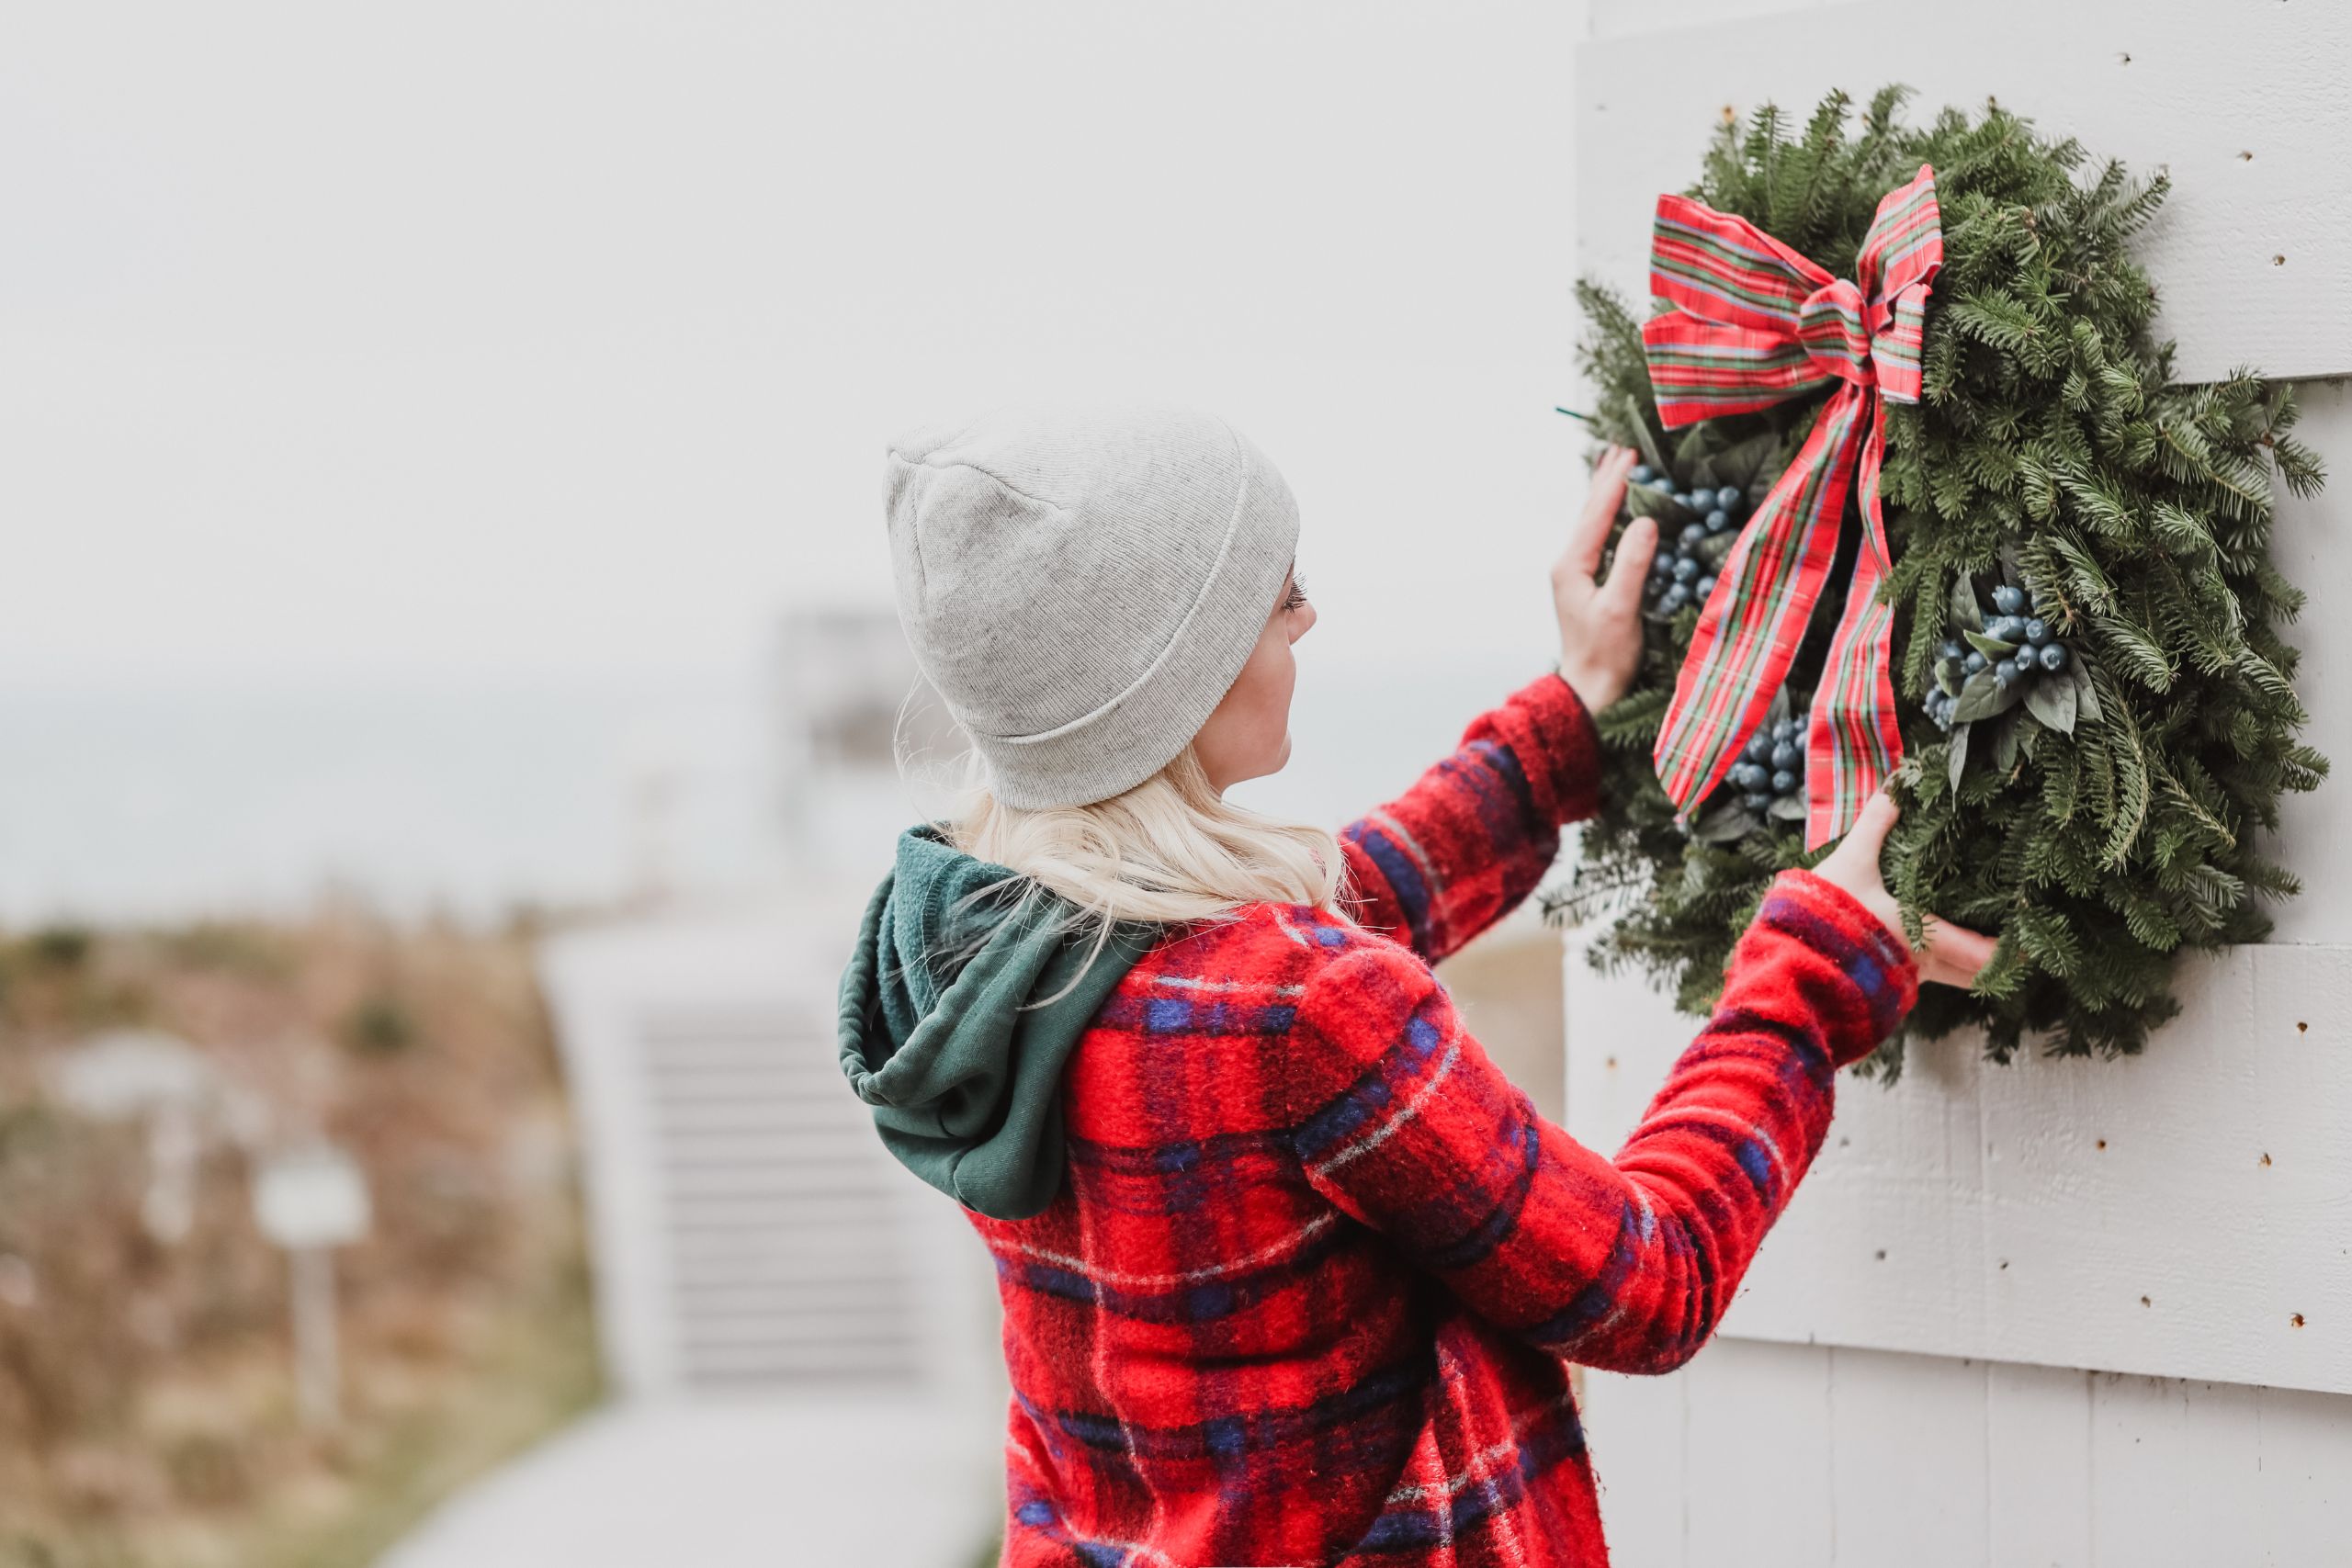 A woman hangs a Whitney's Christmas wreath on a house